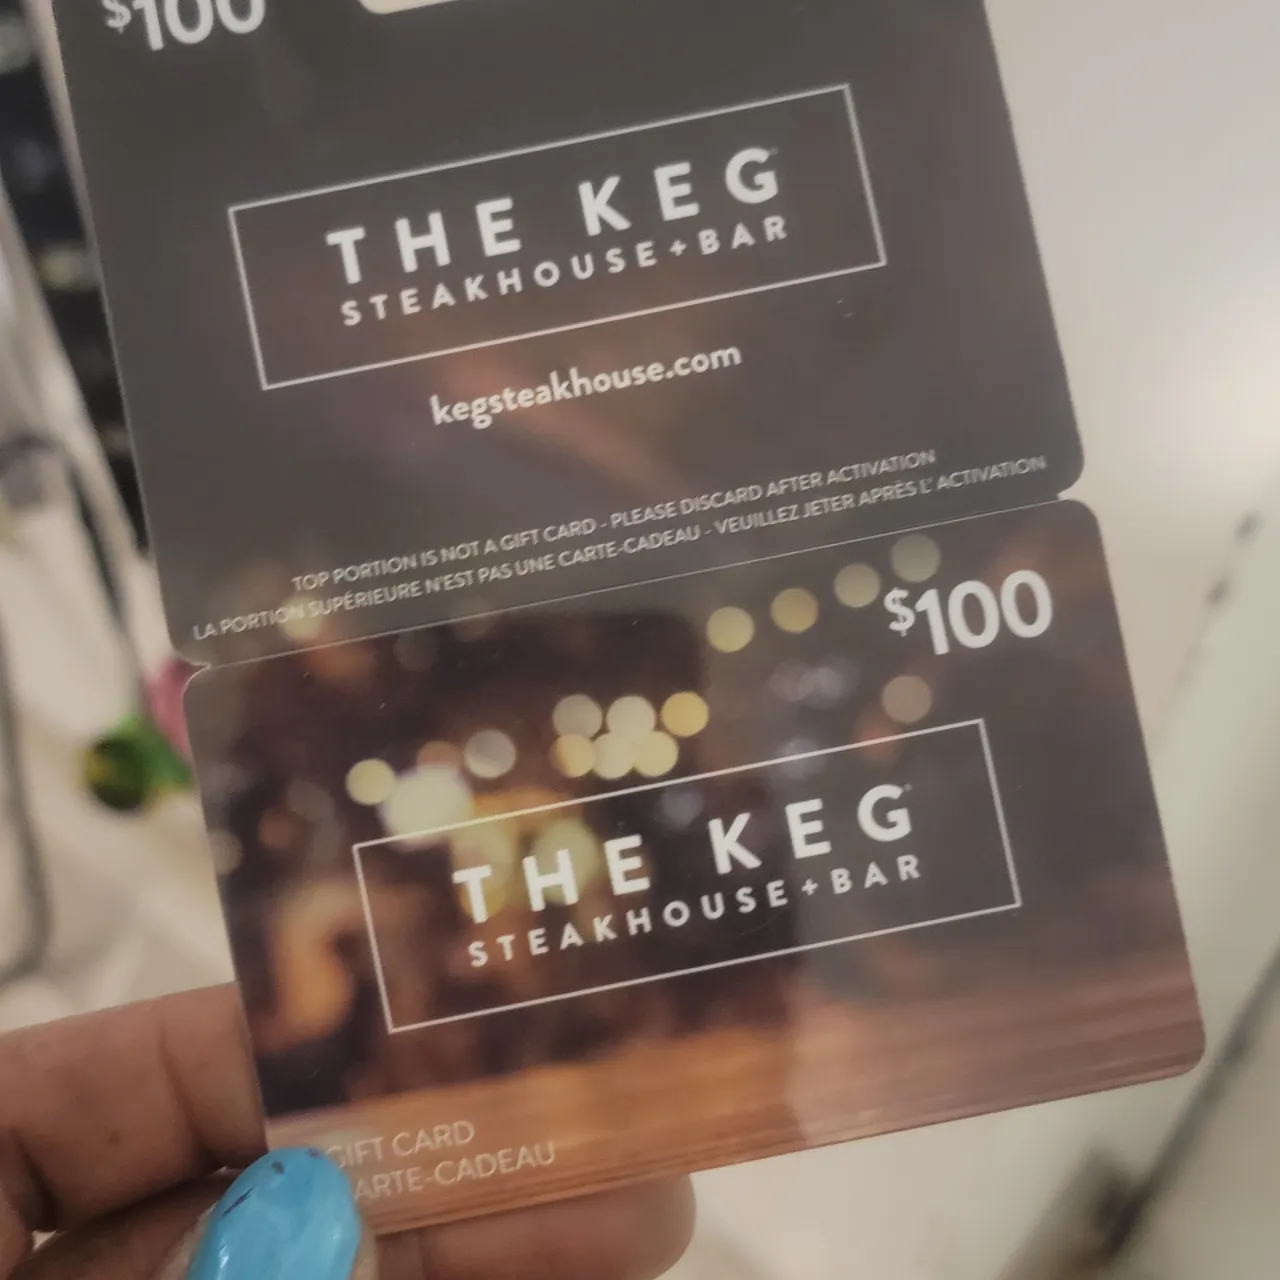 The keg gift card 100.00 photo 1